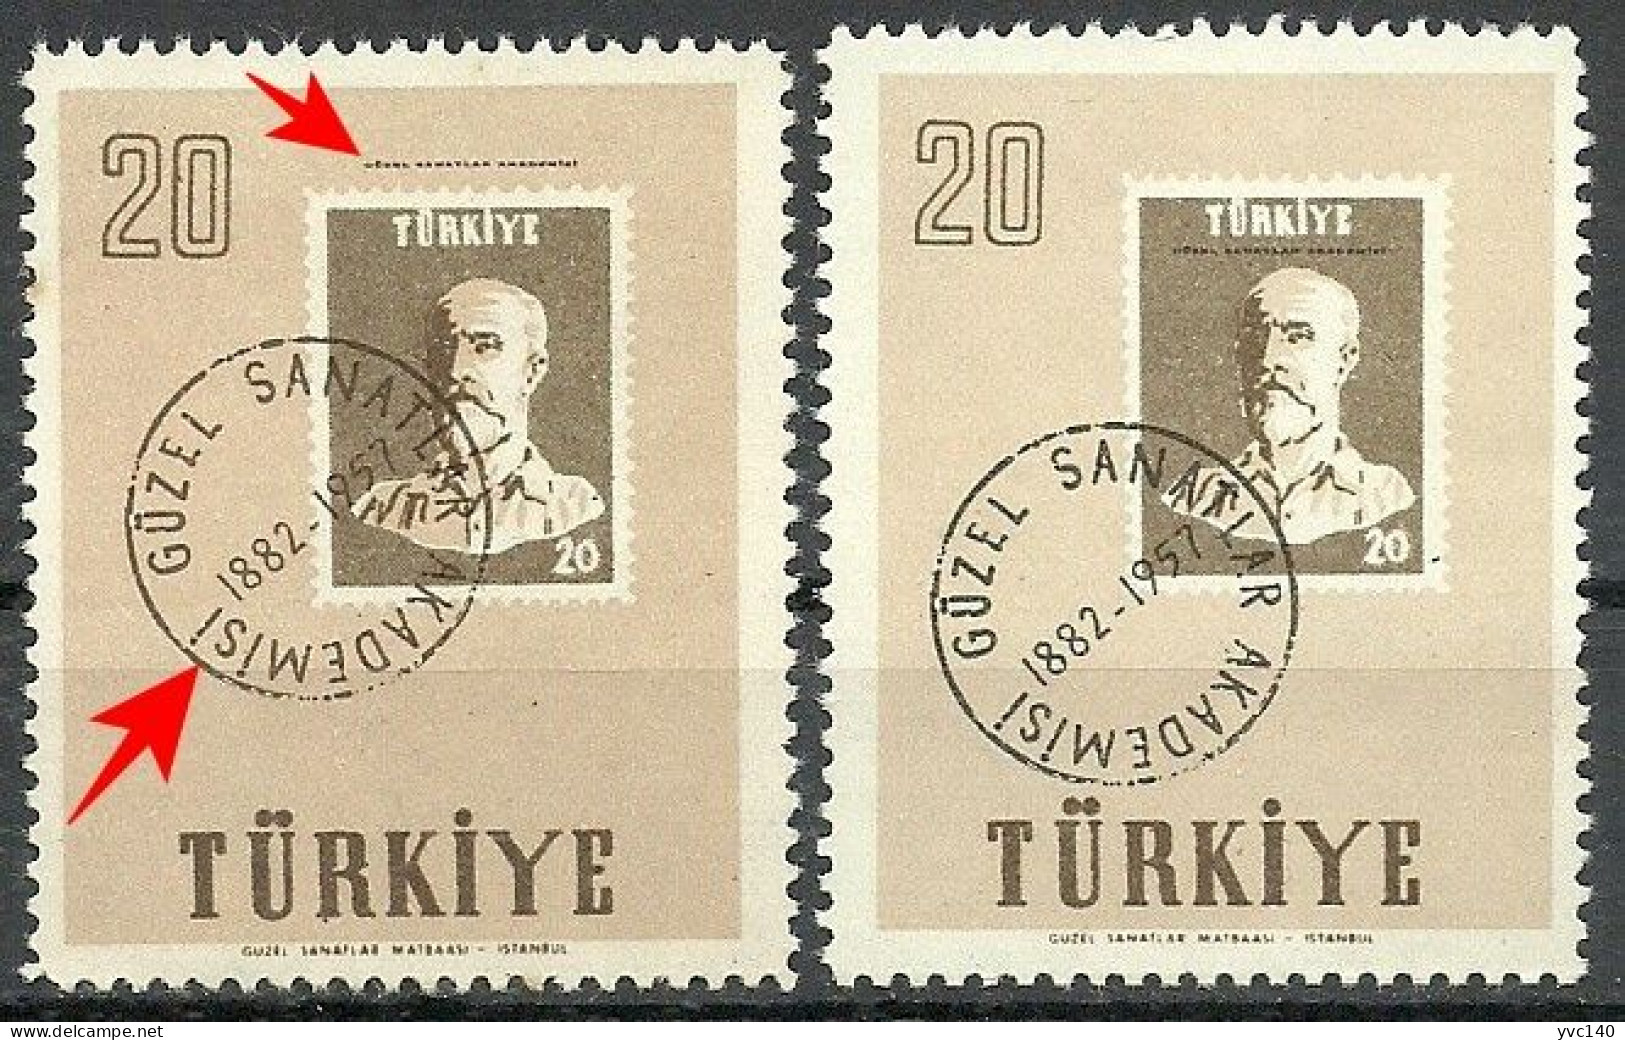 Turkey; 1957 75th Year Of The Art Academy 20 K. ERROR "Shifted Black Color" - Nuovi